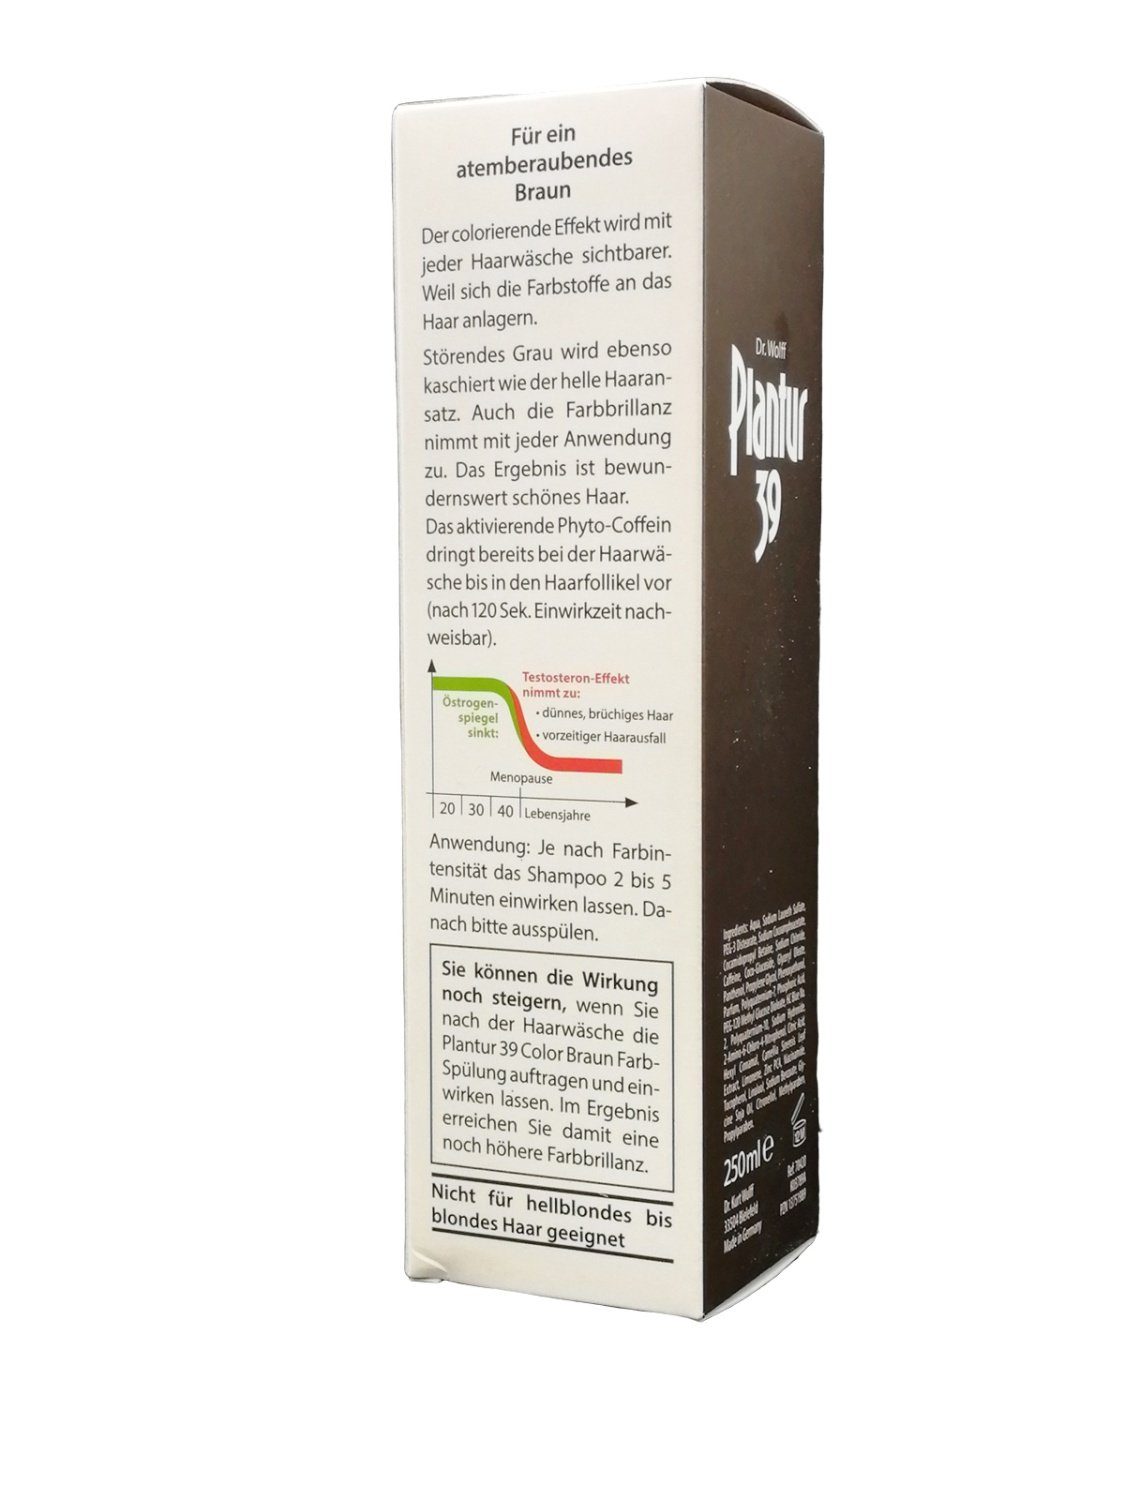 Dr. Kurt Wolff GmbH & Haarshampoo 250 Braun Color PLANTUR Phyto-Coffein-Shampoo, ml Co. 39 KG